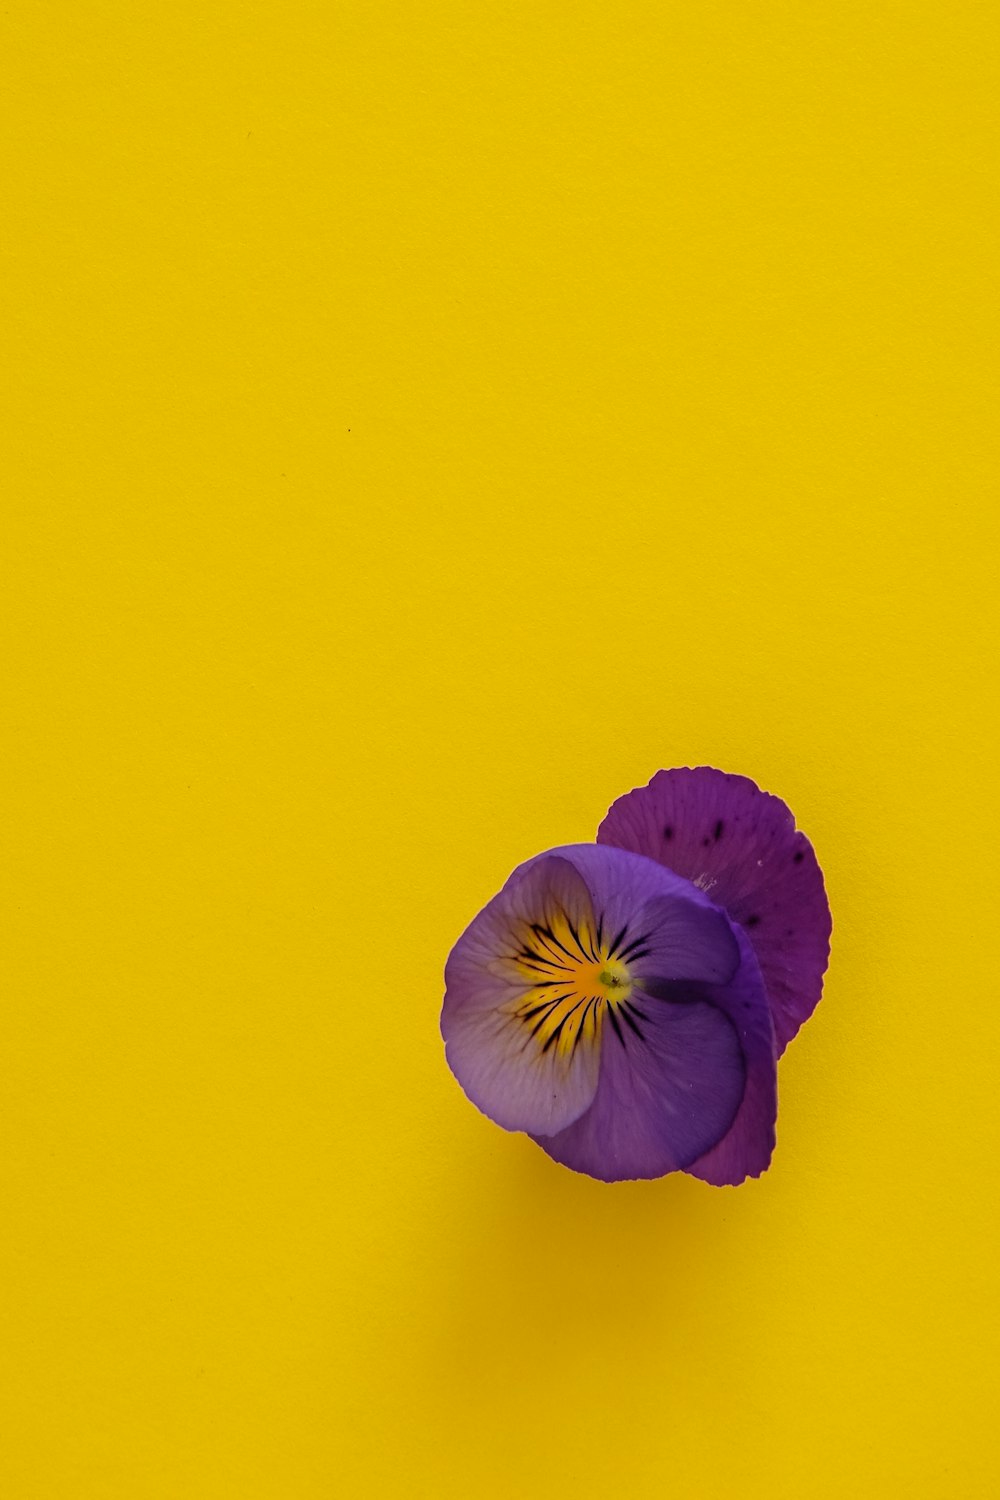 purple flower on yellow background